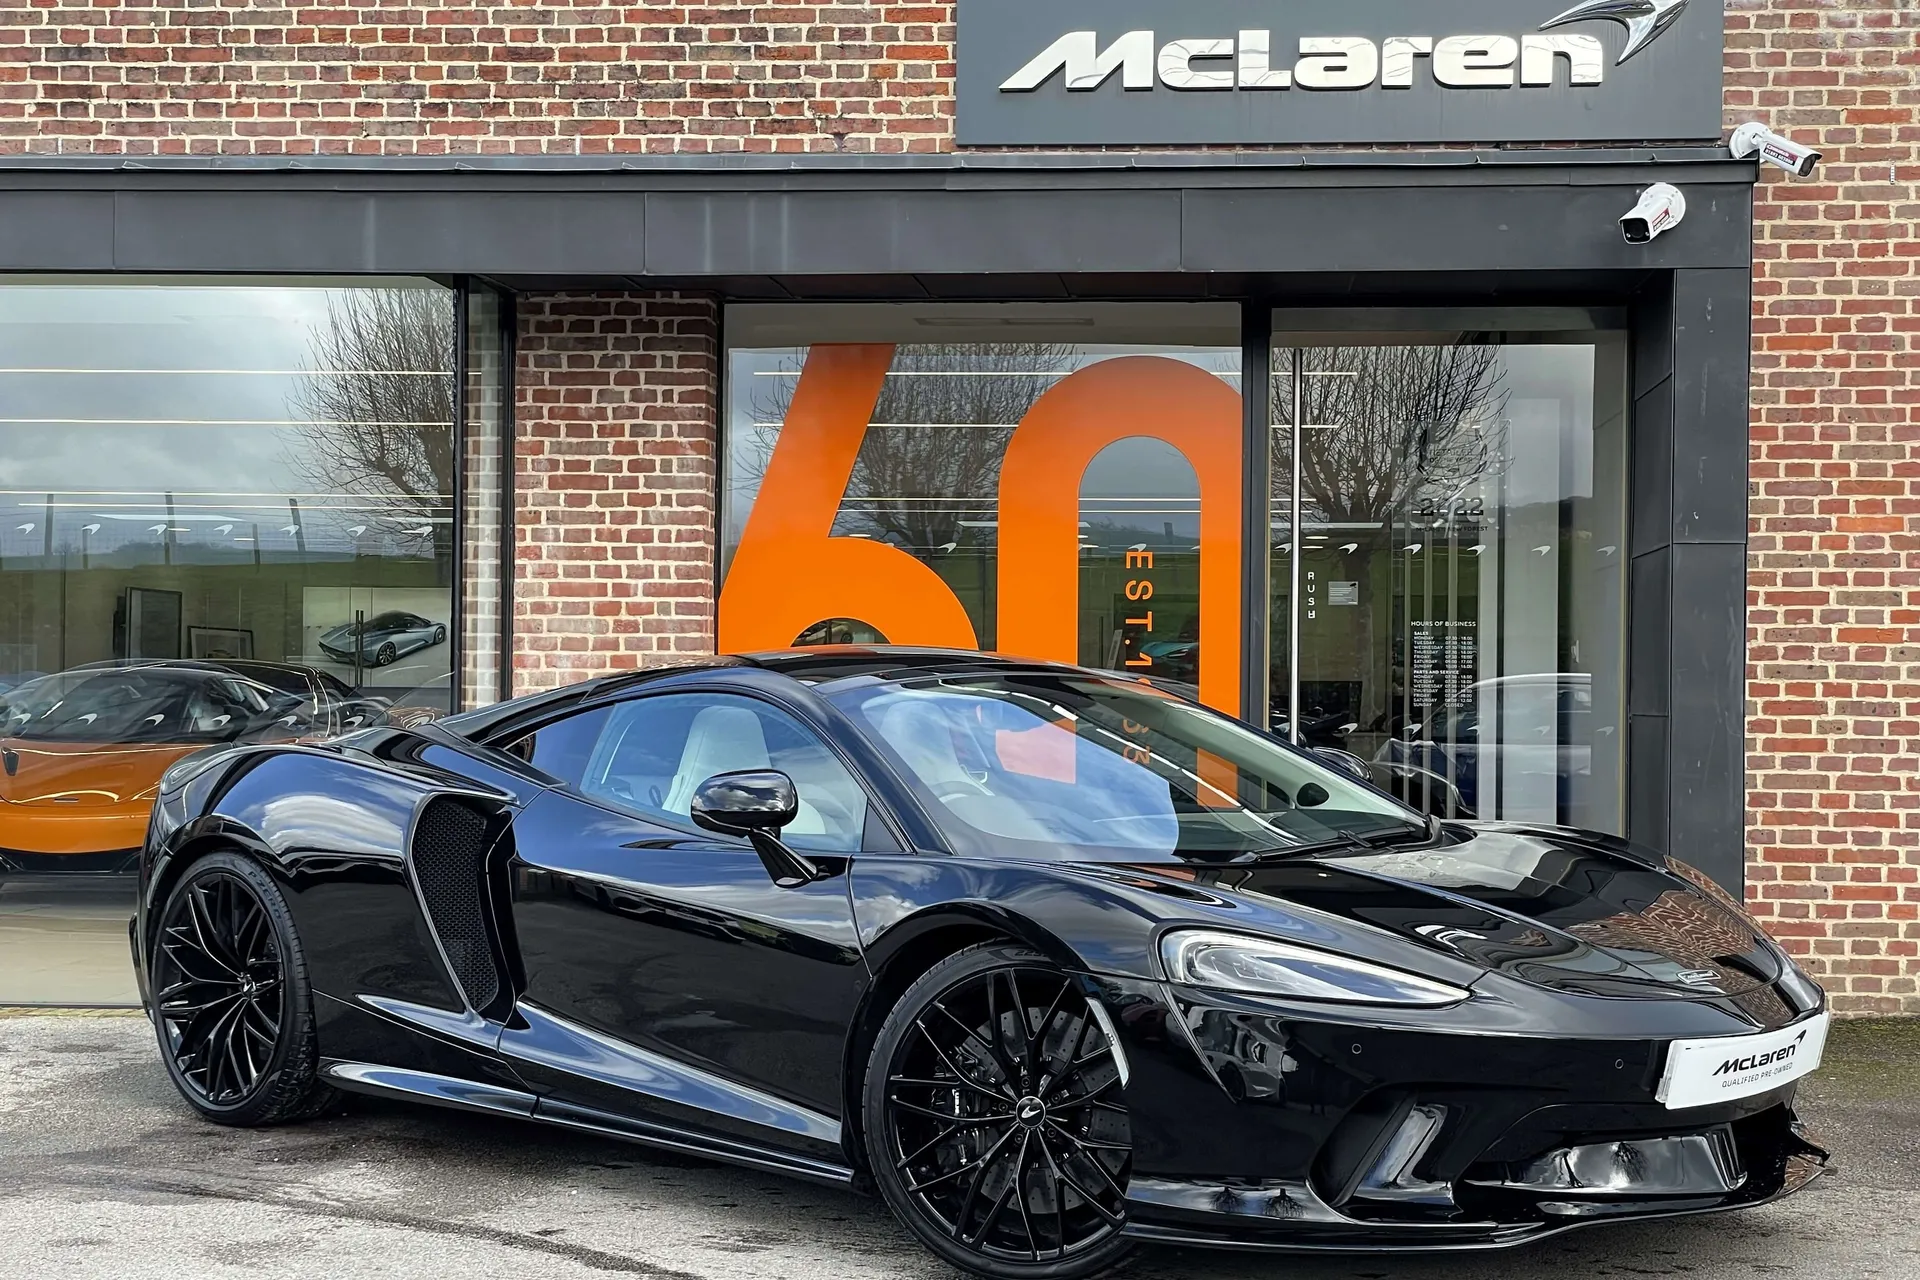 McLaren GT focused image